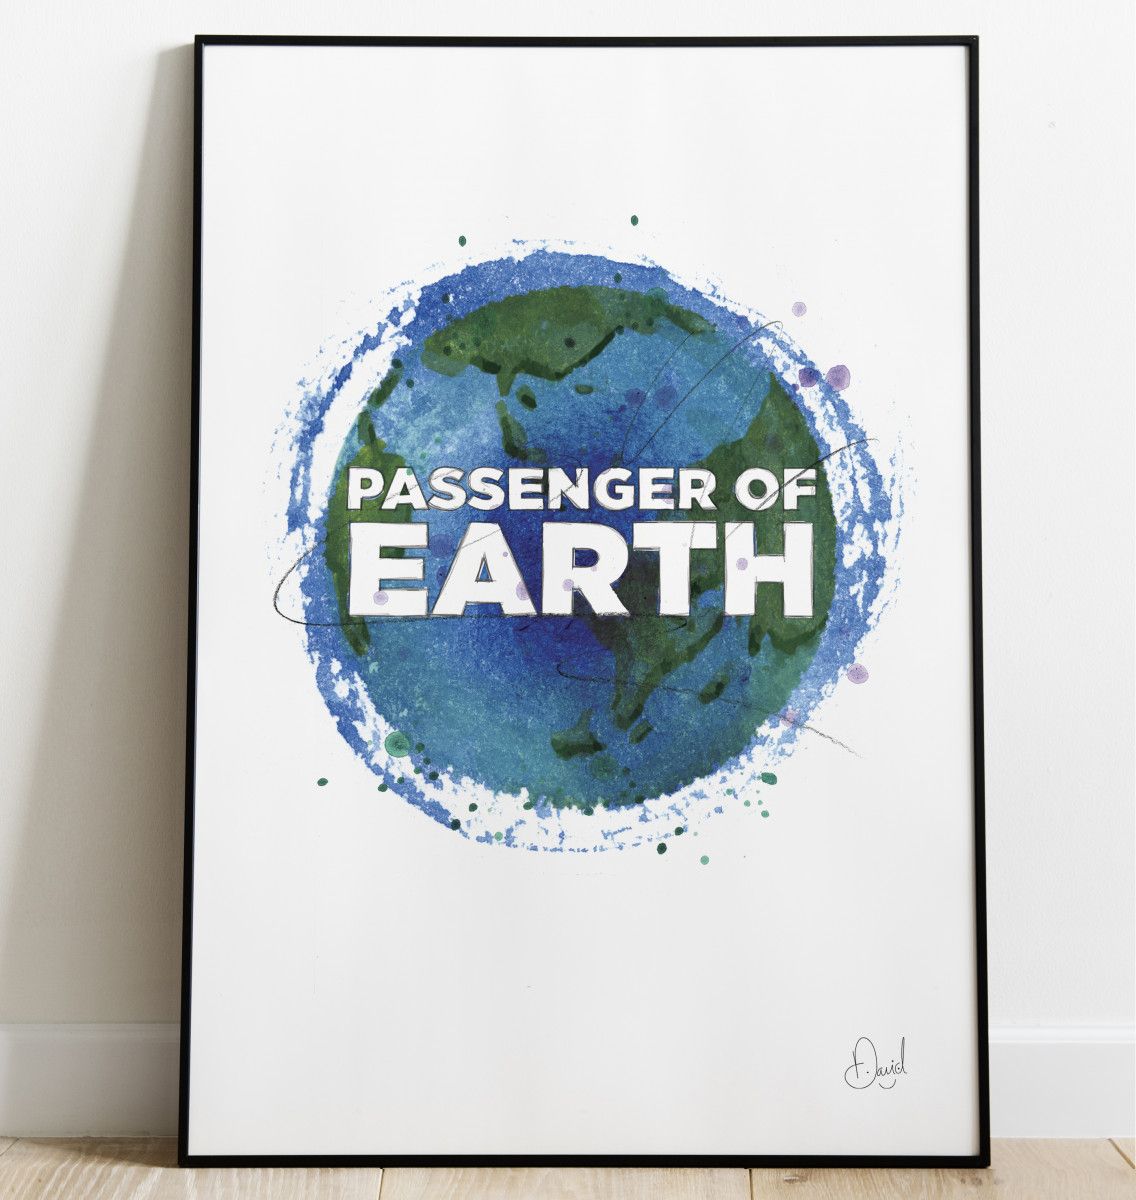 Passenger of Earth - Typographic art print